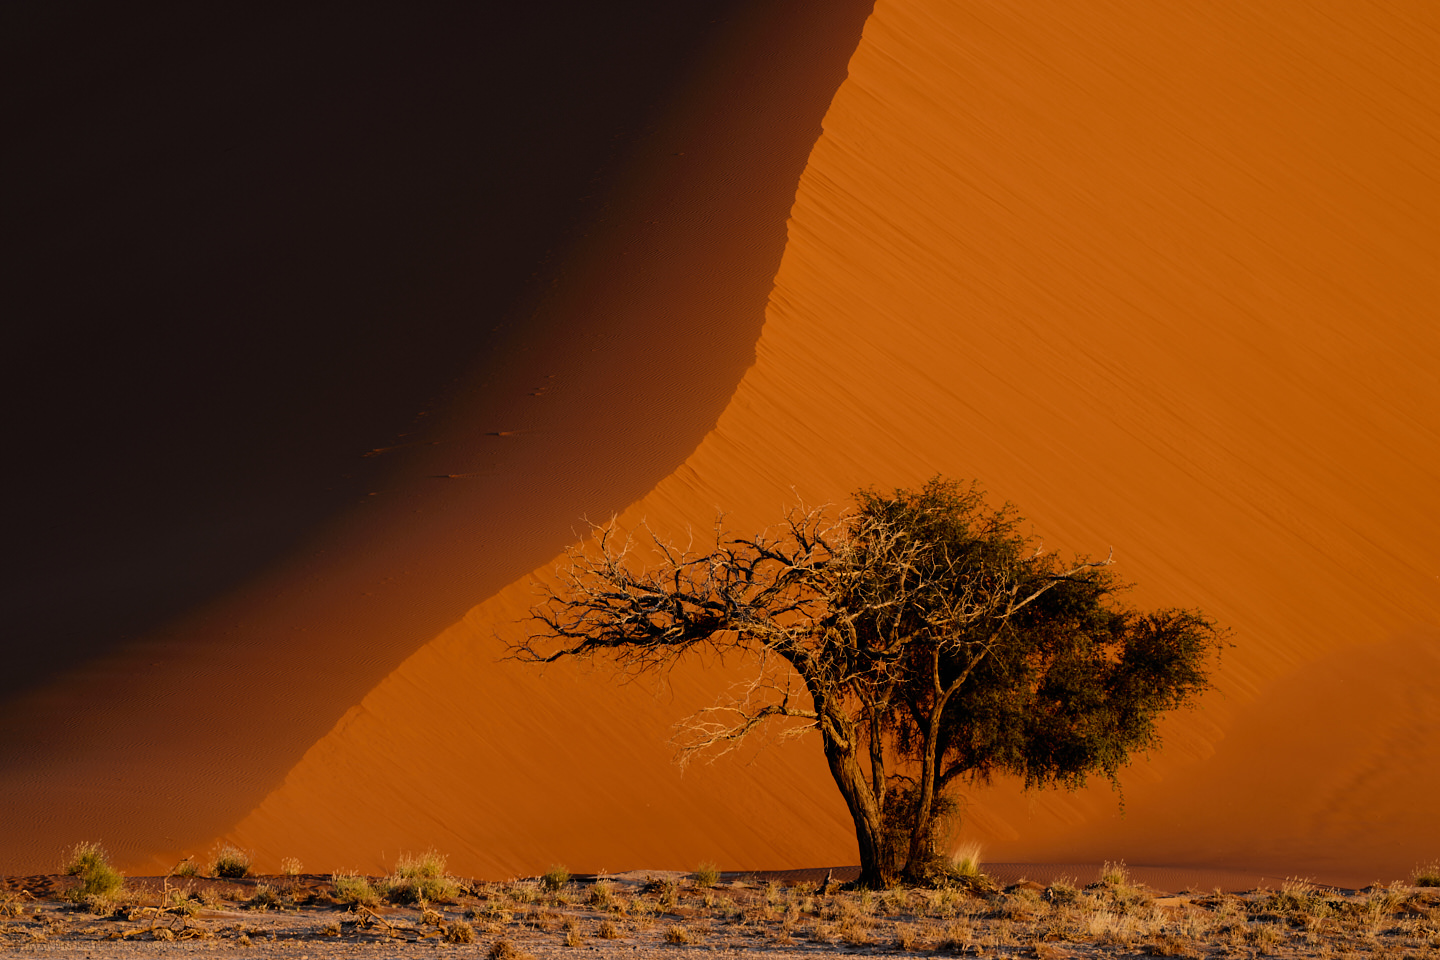 Tree, Dune, and Shadow